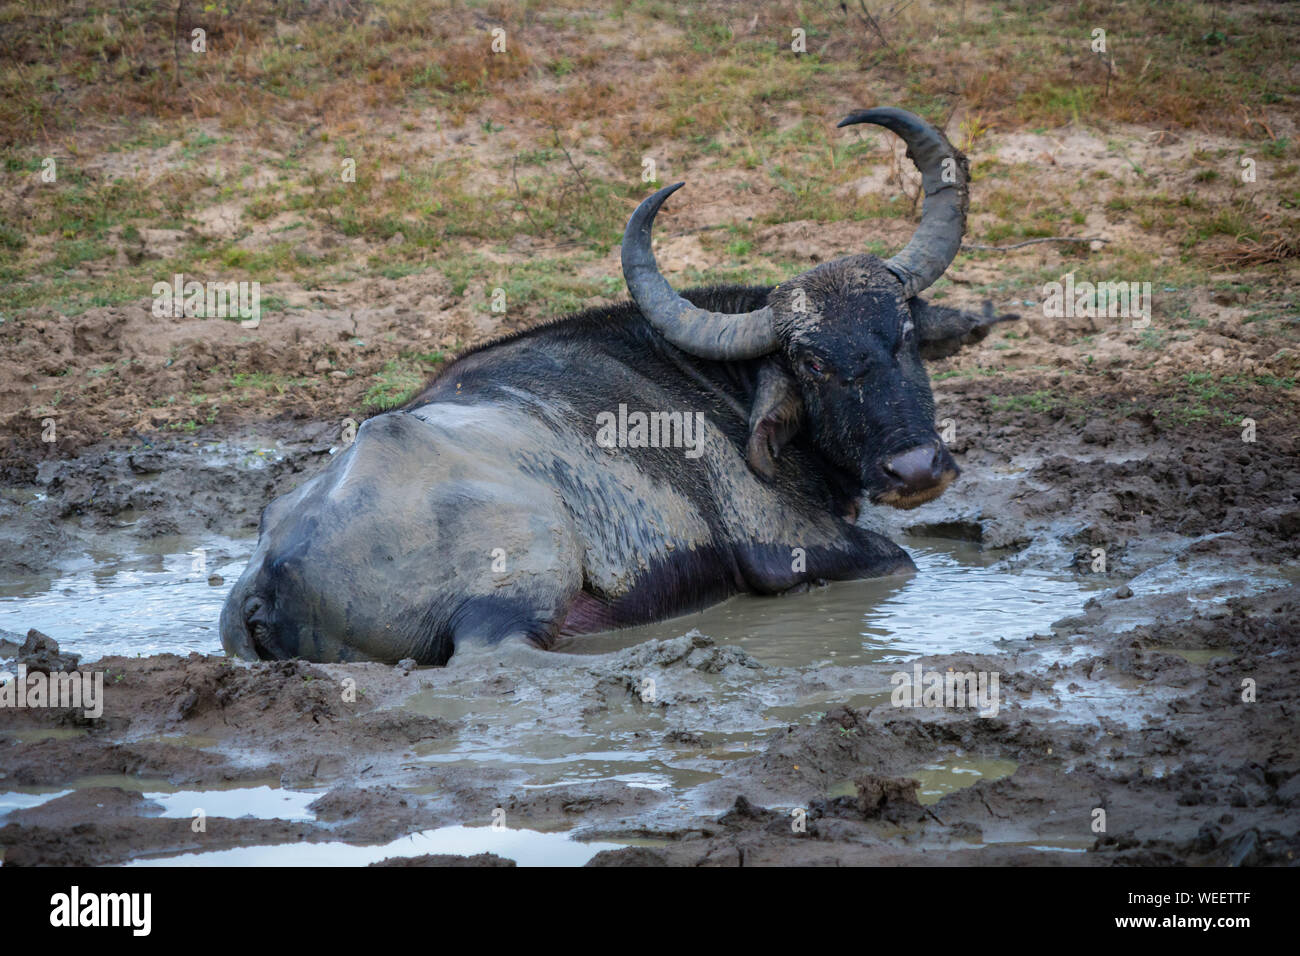 Buffalo In Muddy Water Stock Photo